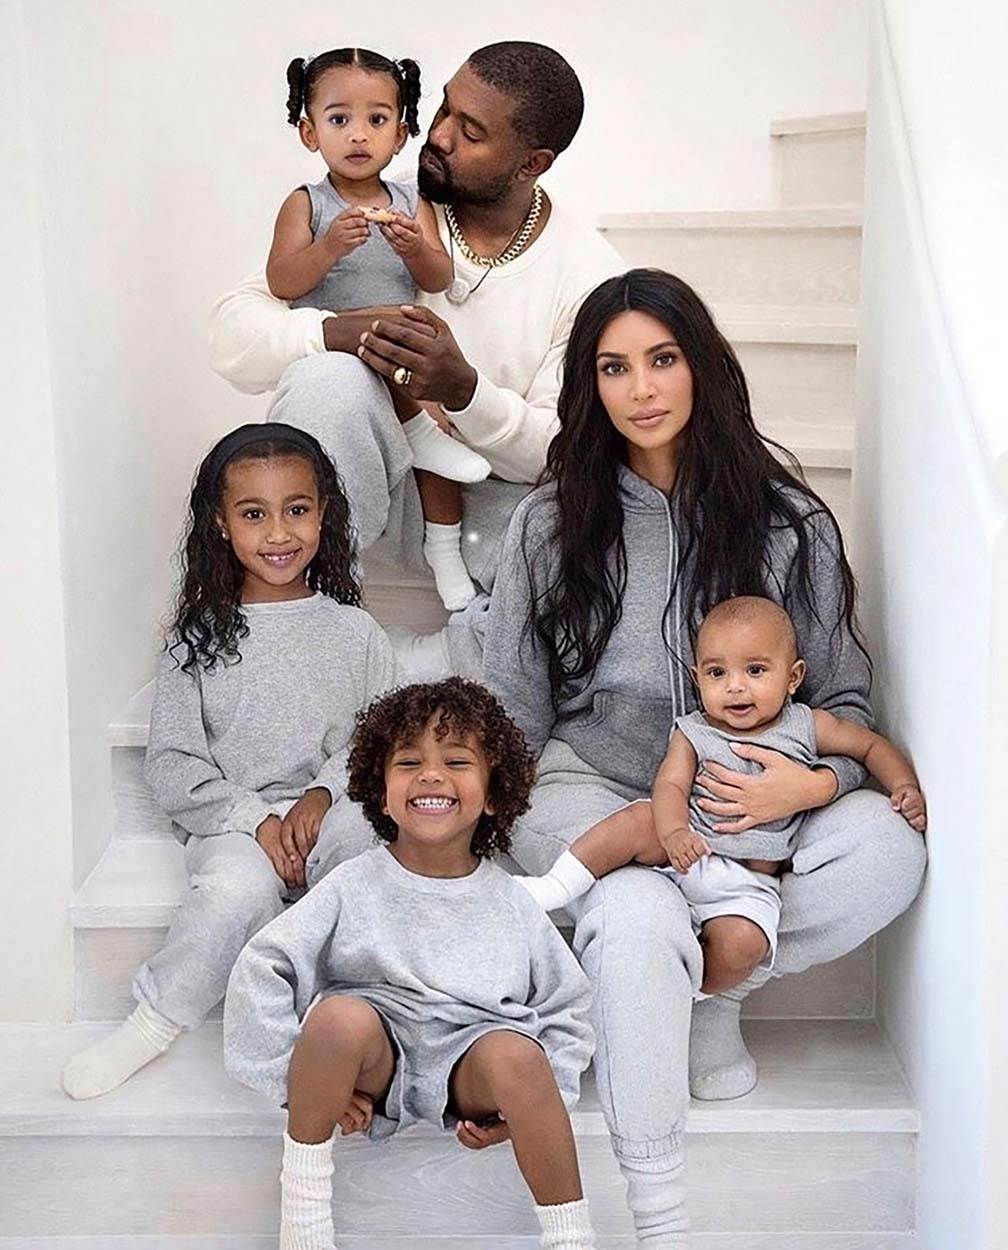 Kim Kardashian i Kanye West su dobili dvoje djece preko surogat-majke